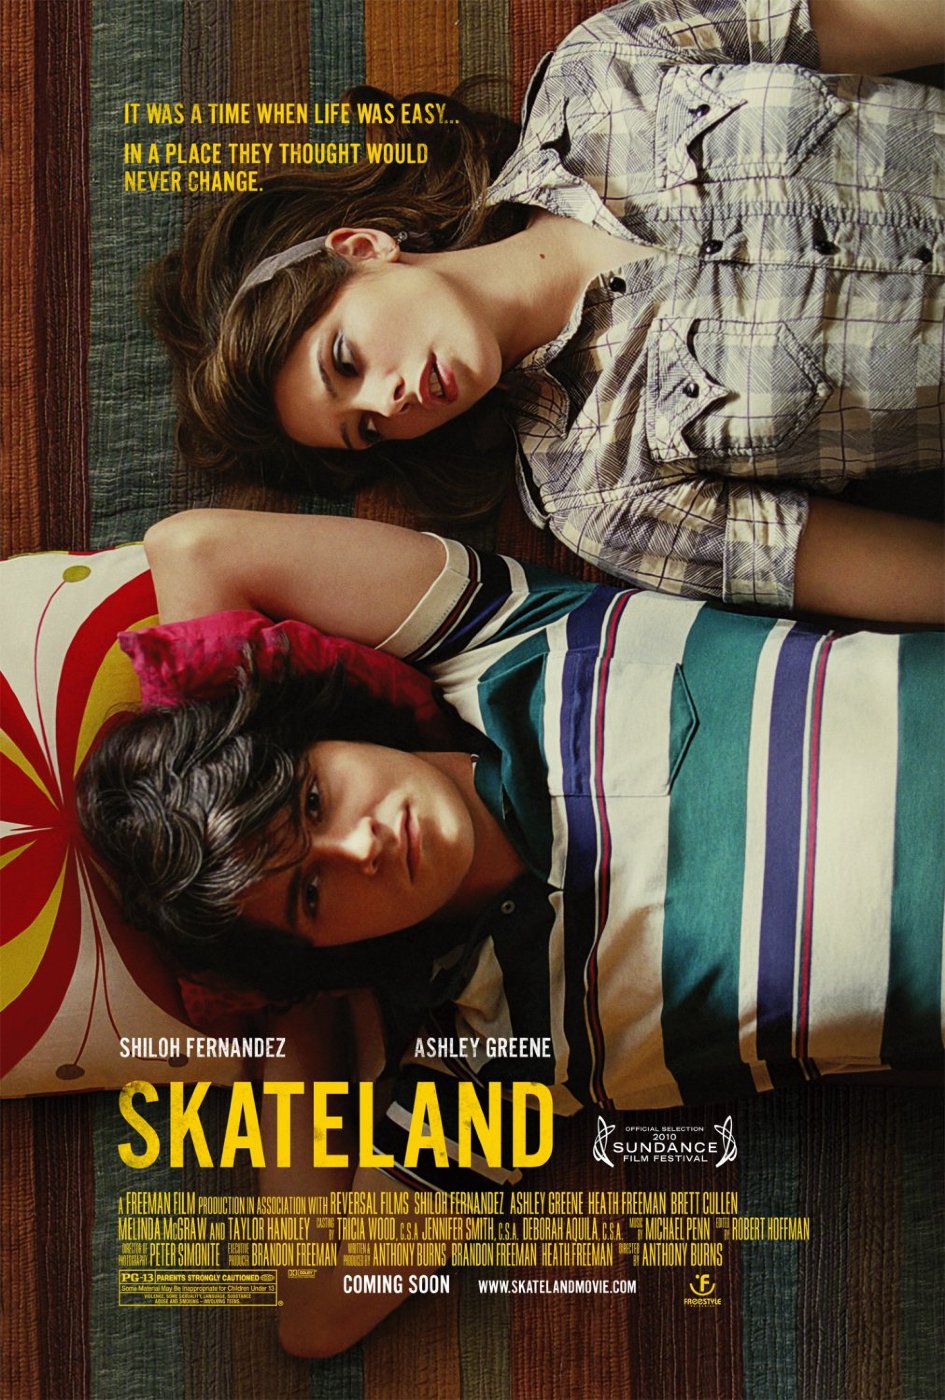  Skateland.2010.LIMITED.1080p.BluRay.x264-PSYCHD 6.56GB-1.png